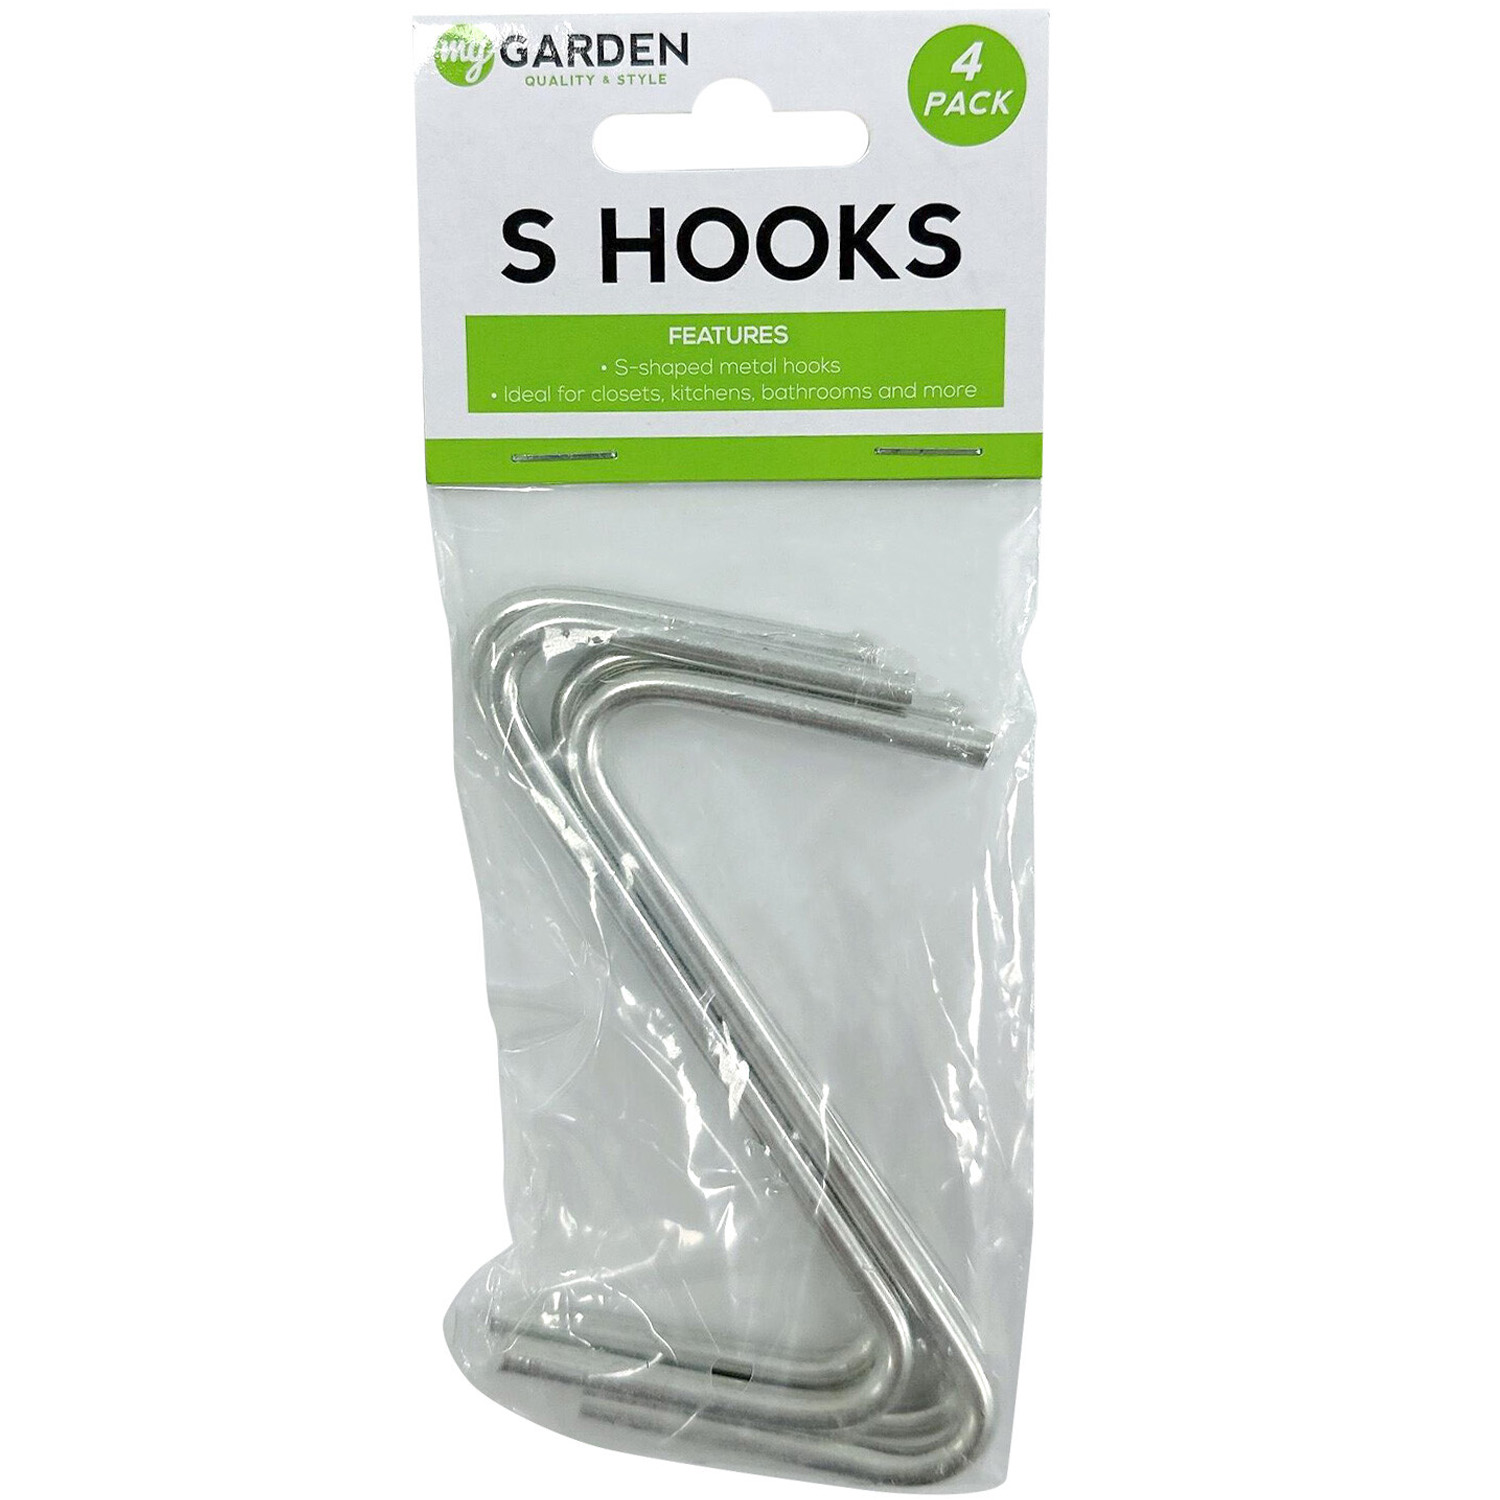 My Garden Silver S Hooks 4 Pack